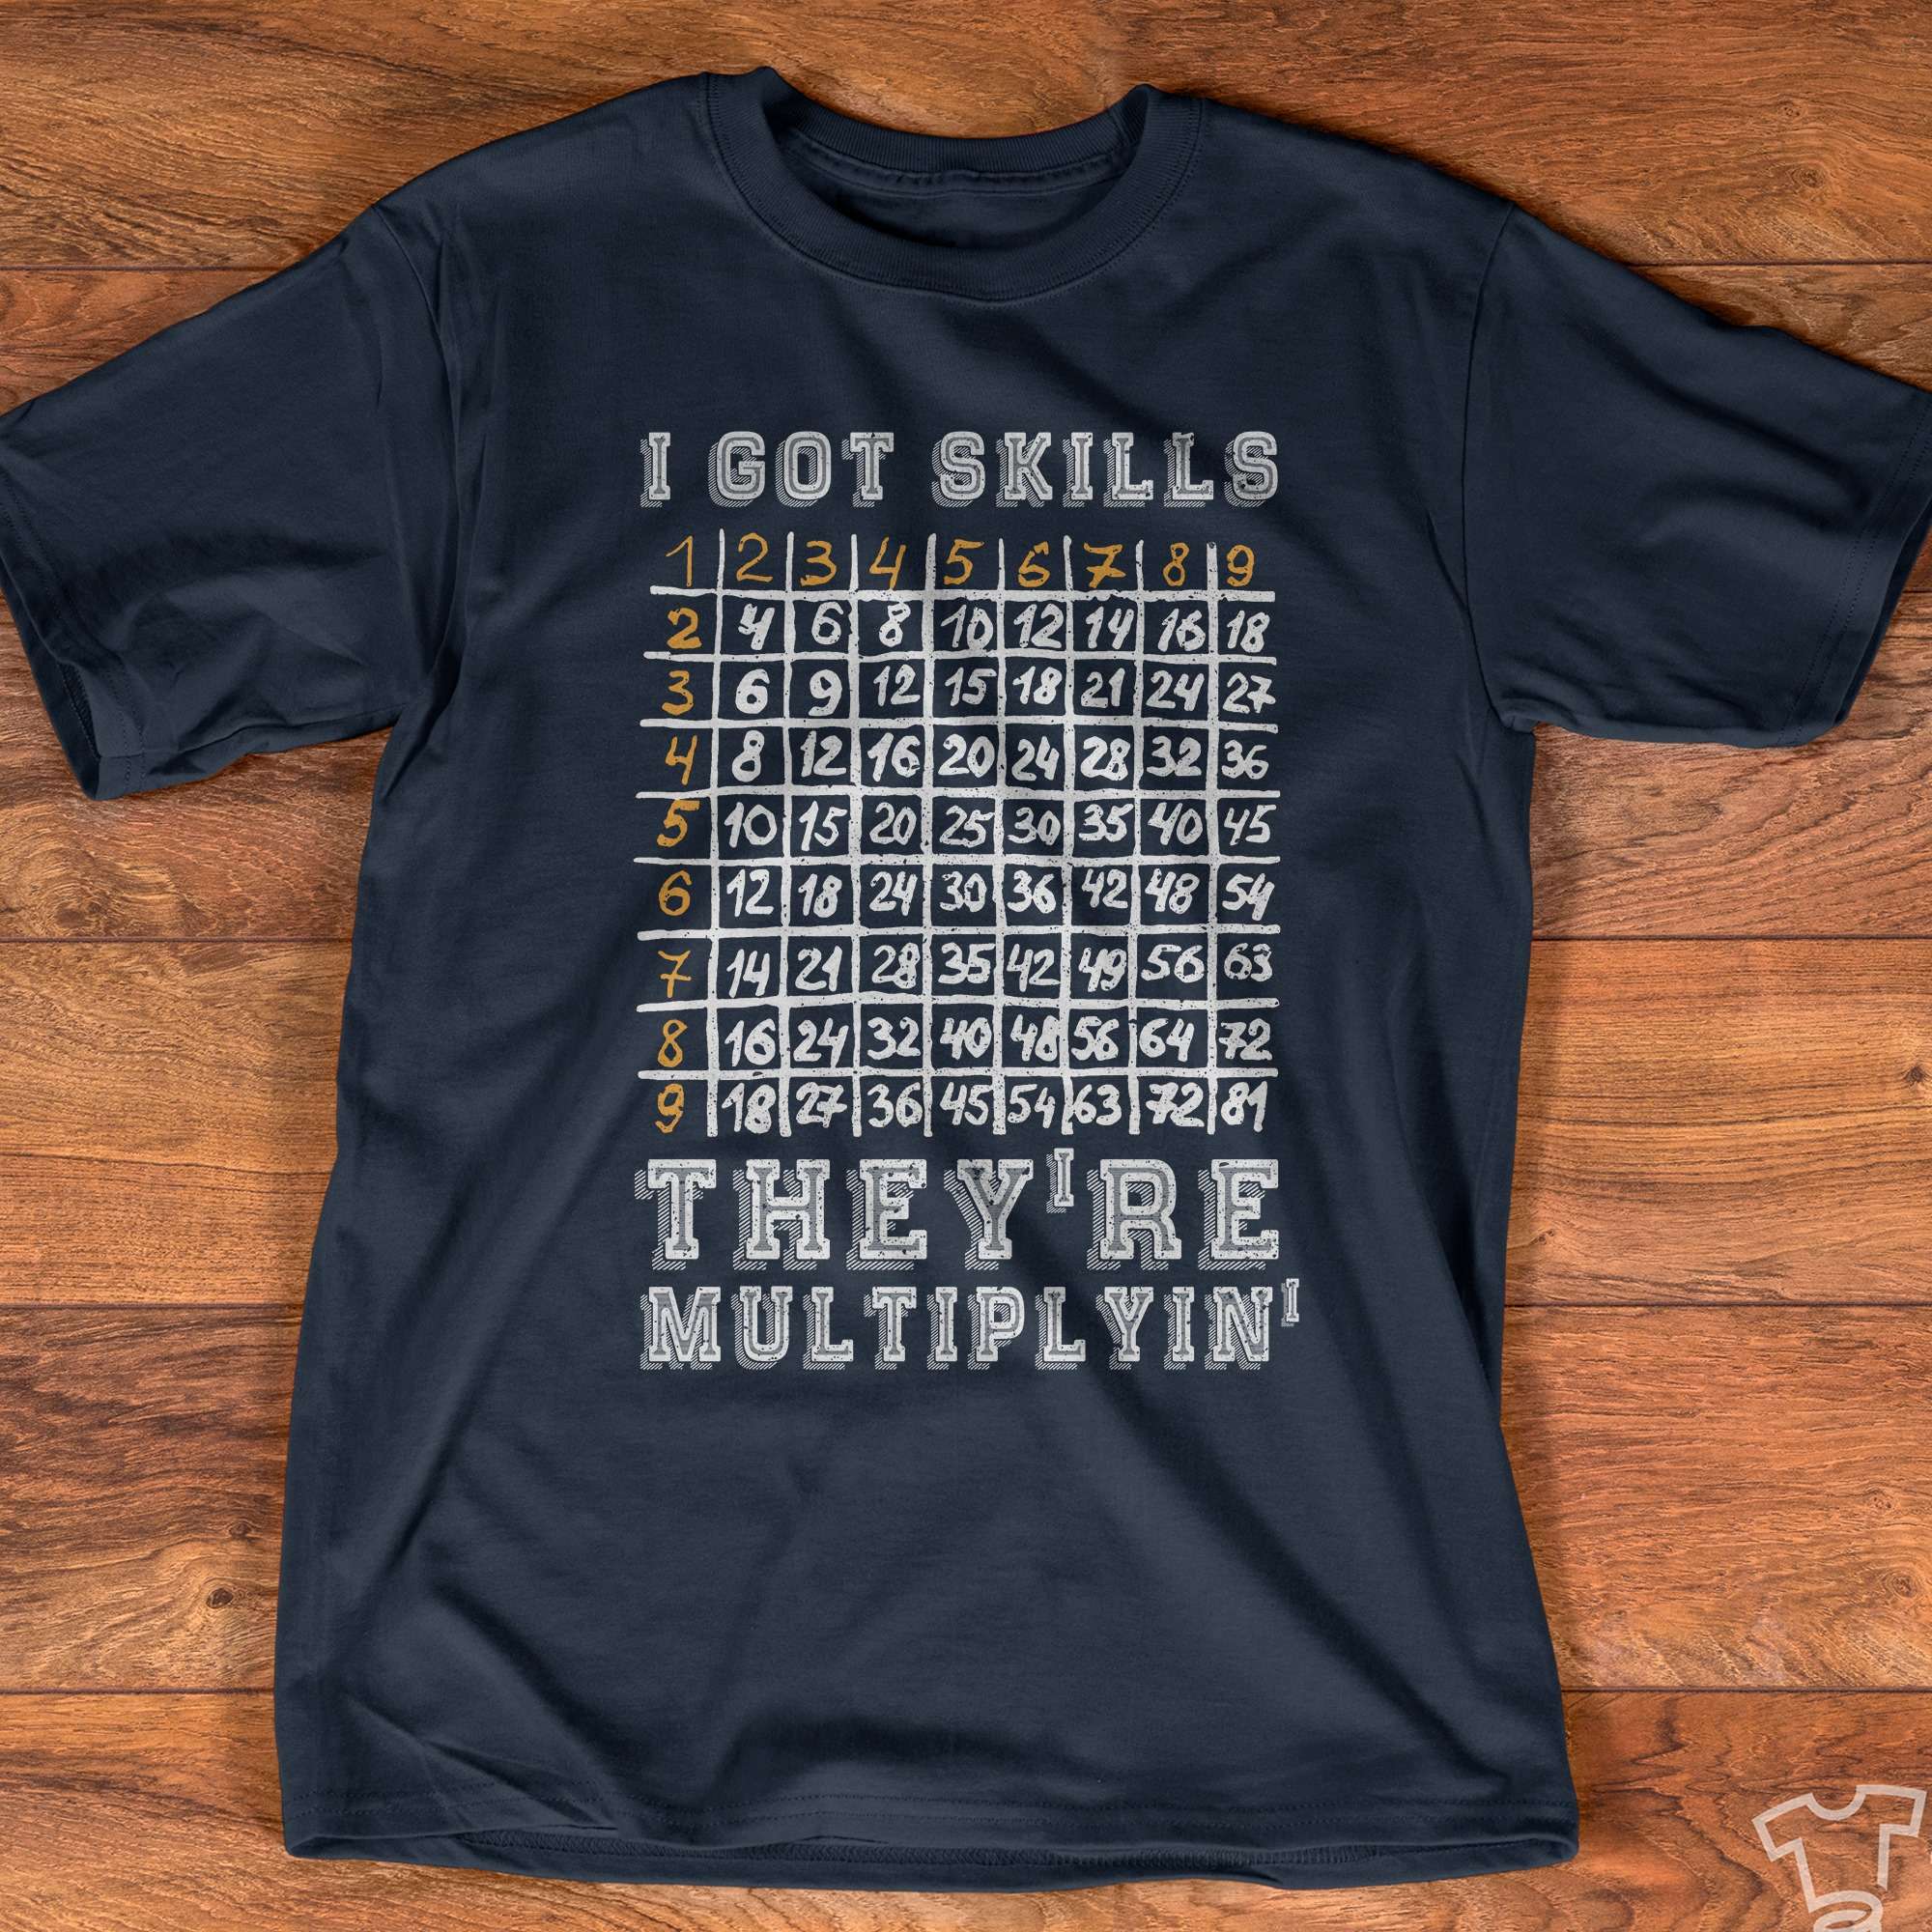 I got skills they're multiplyin - Multiplication table